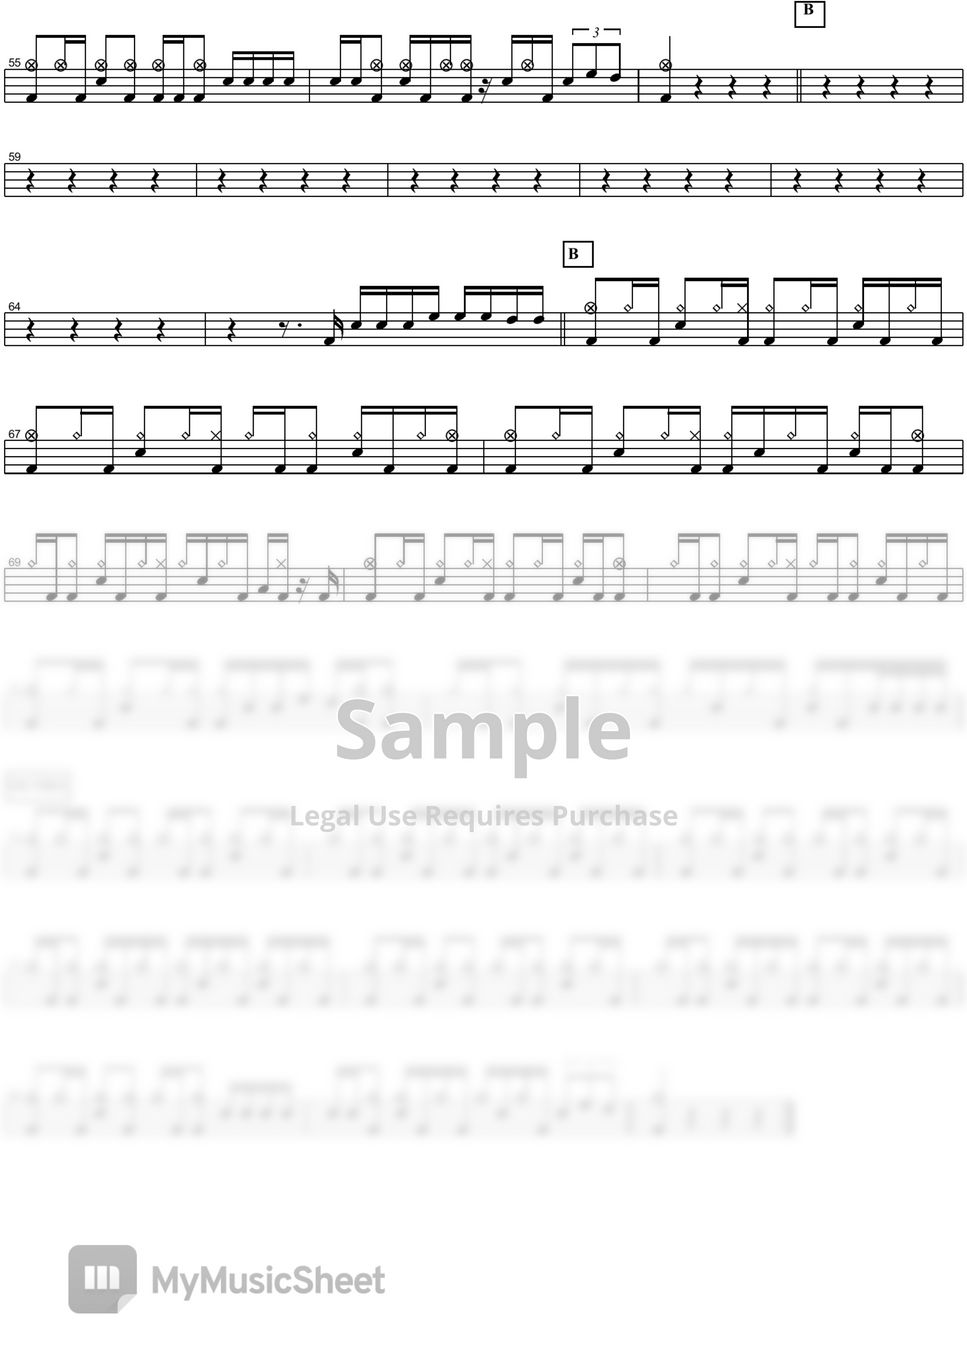 My Sacrifice (Drum transcription) - Download Sheet Music PDF file